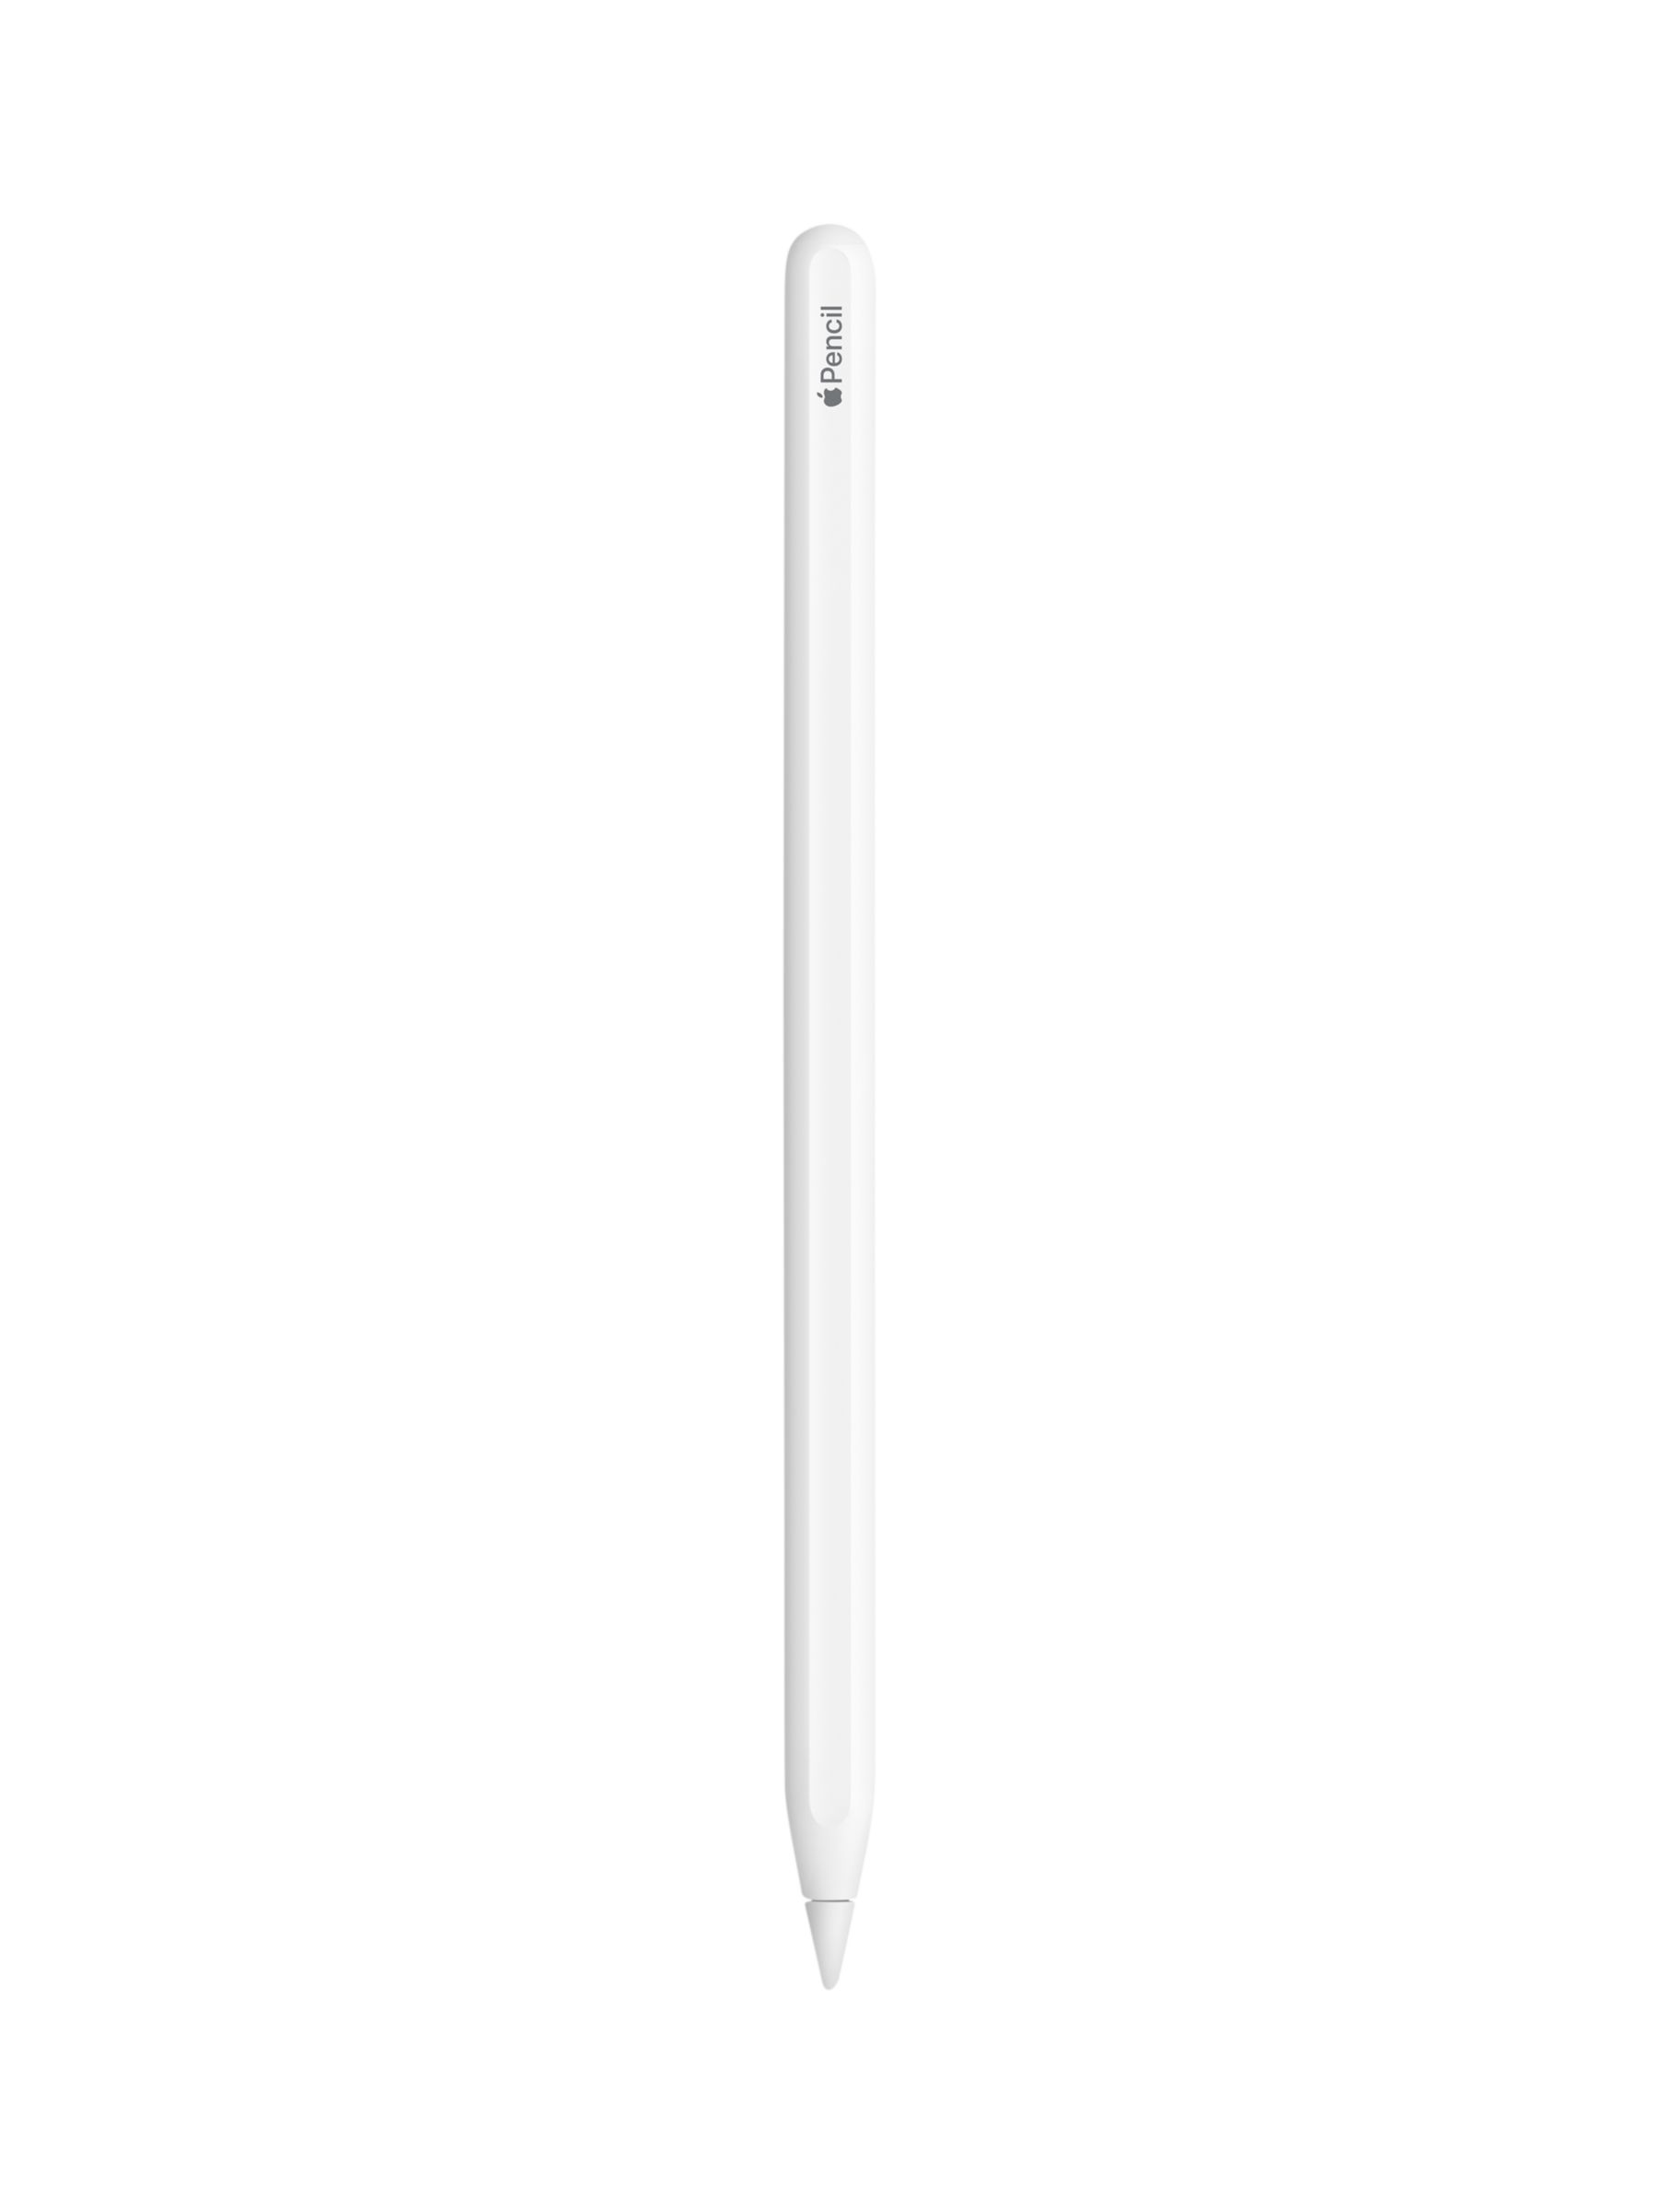 Apple Pencil, 2nd Generation (2018), Matte White